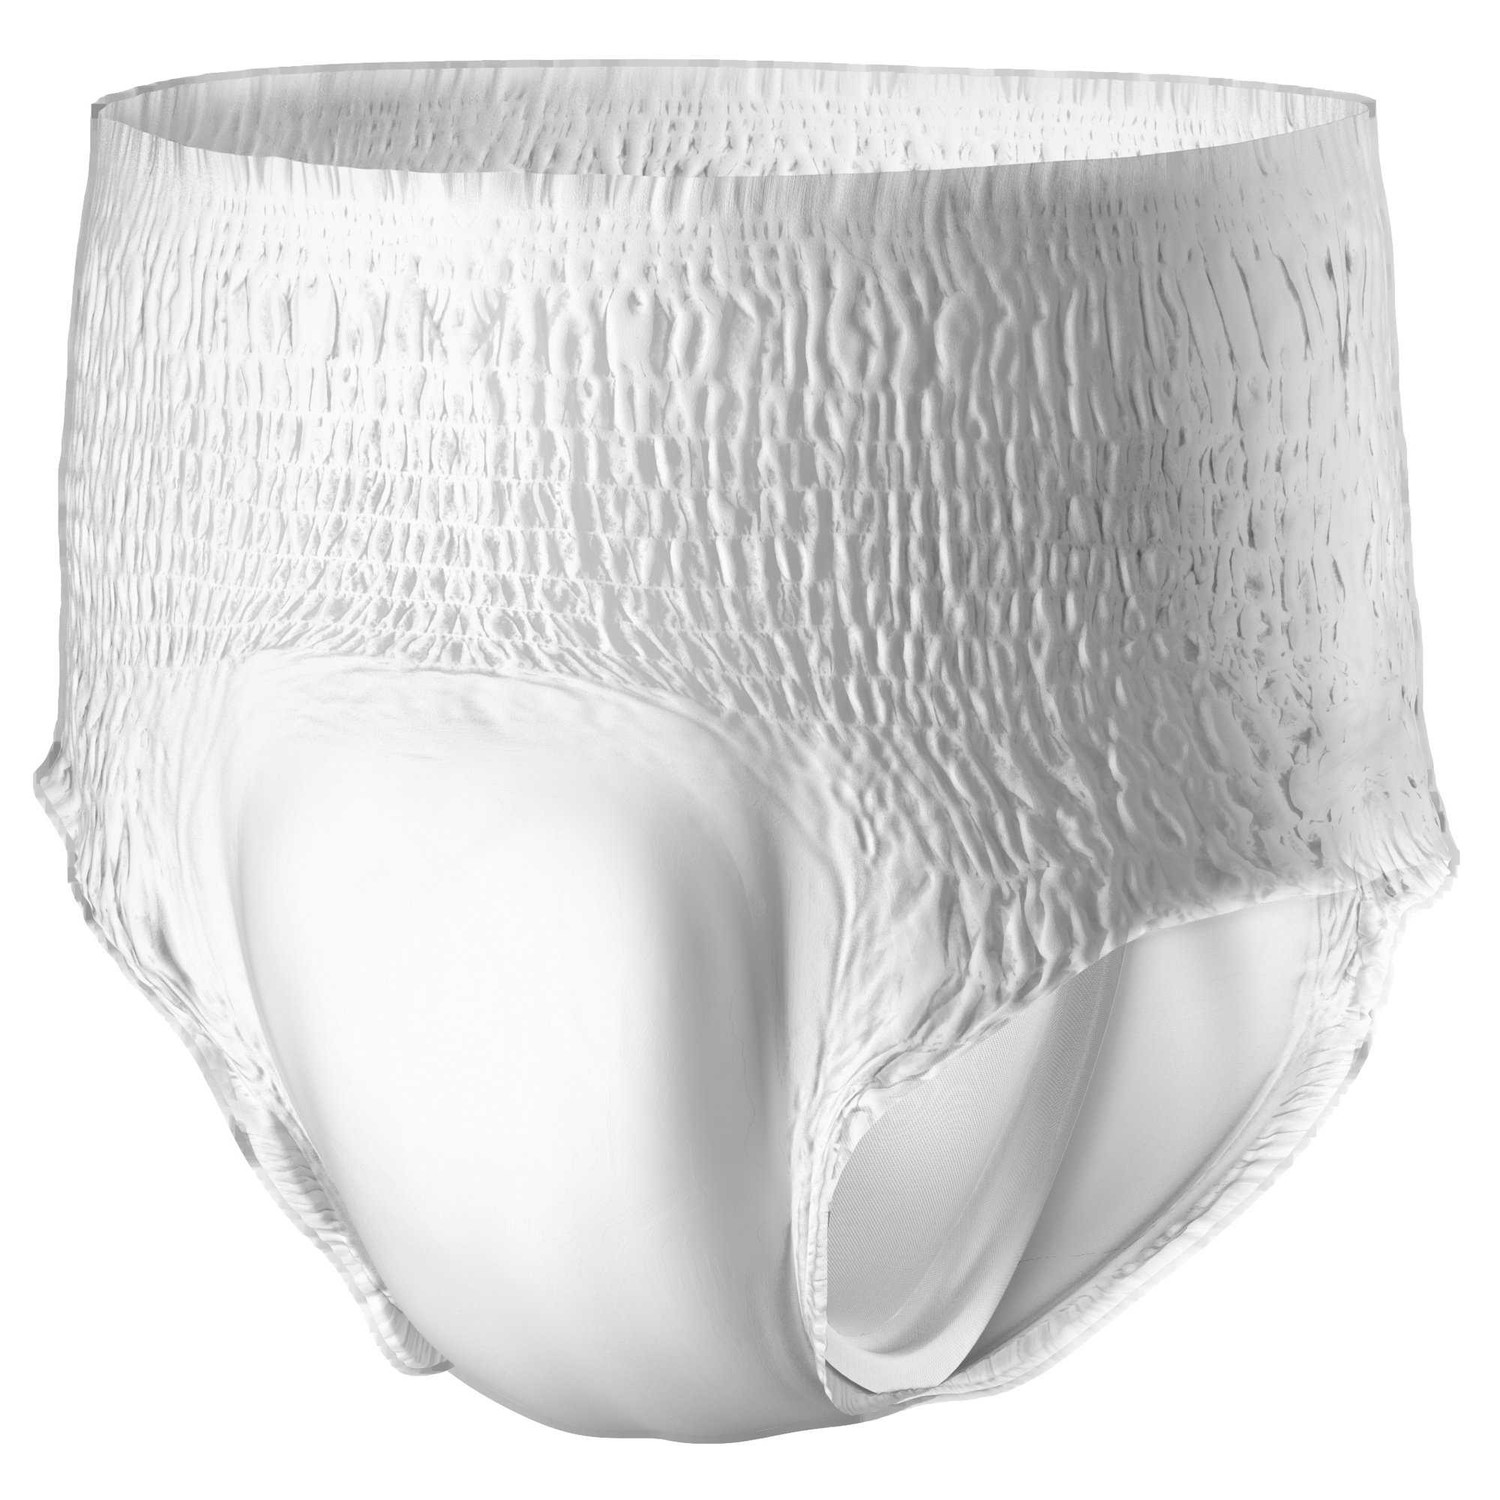 Unisex Adult Absorbent Underwear Prevail Overnight